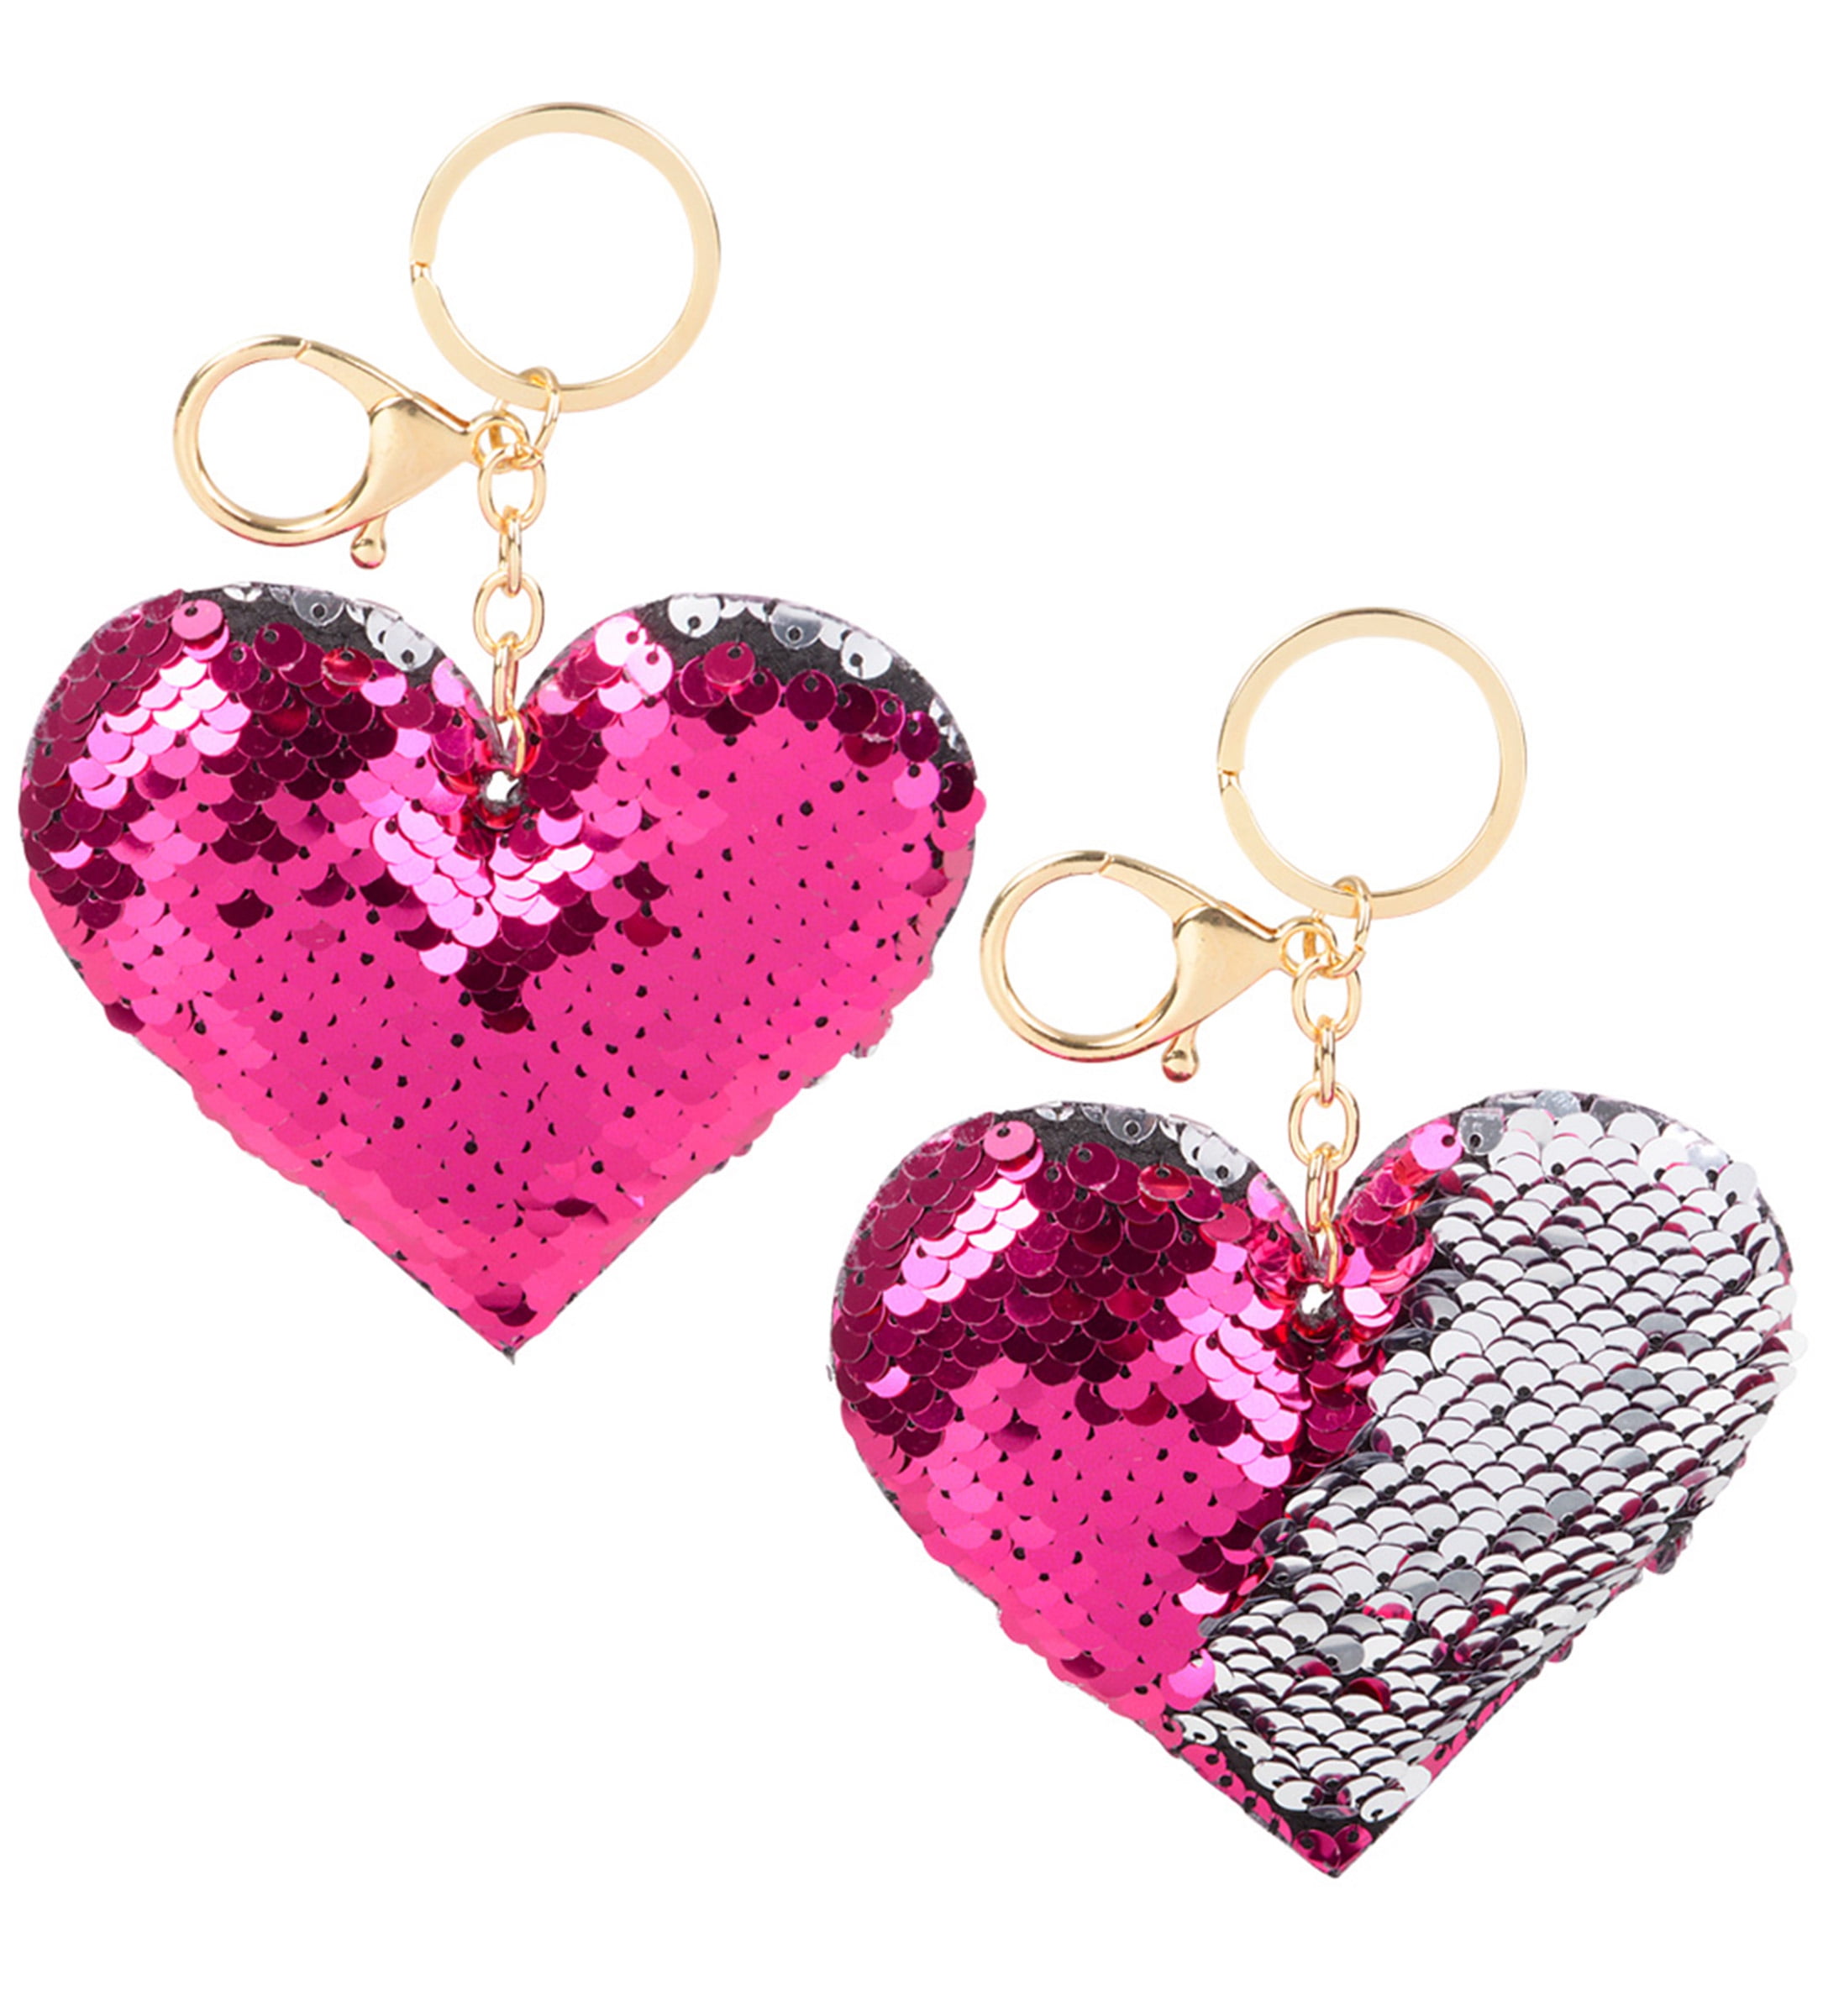 Picture Keychain Heart Keychain Heart Picture Keychain Resin Photo Keychain Flower Heart Keychain- Custom Heart Keychain